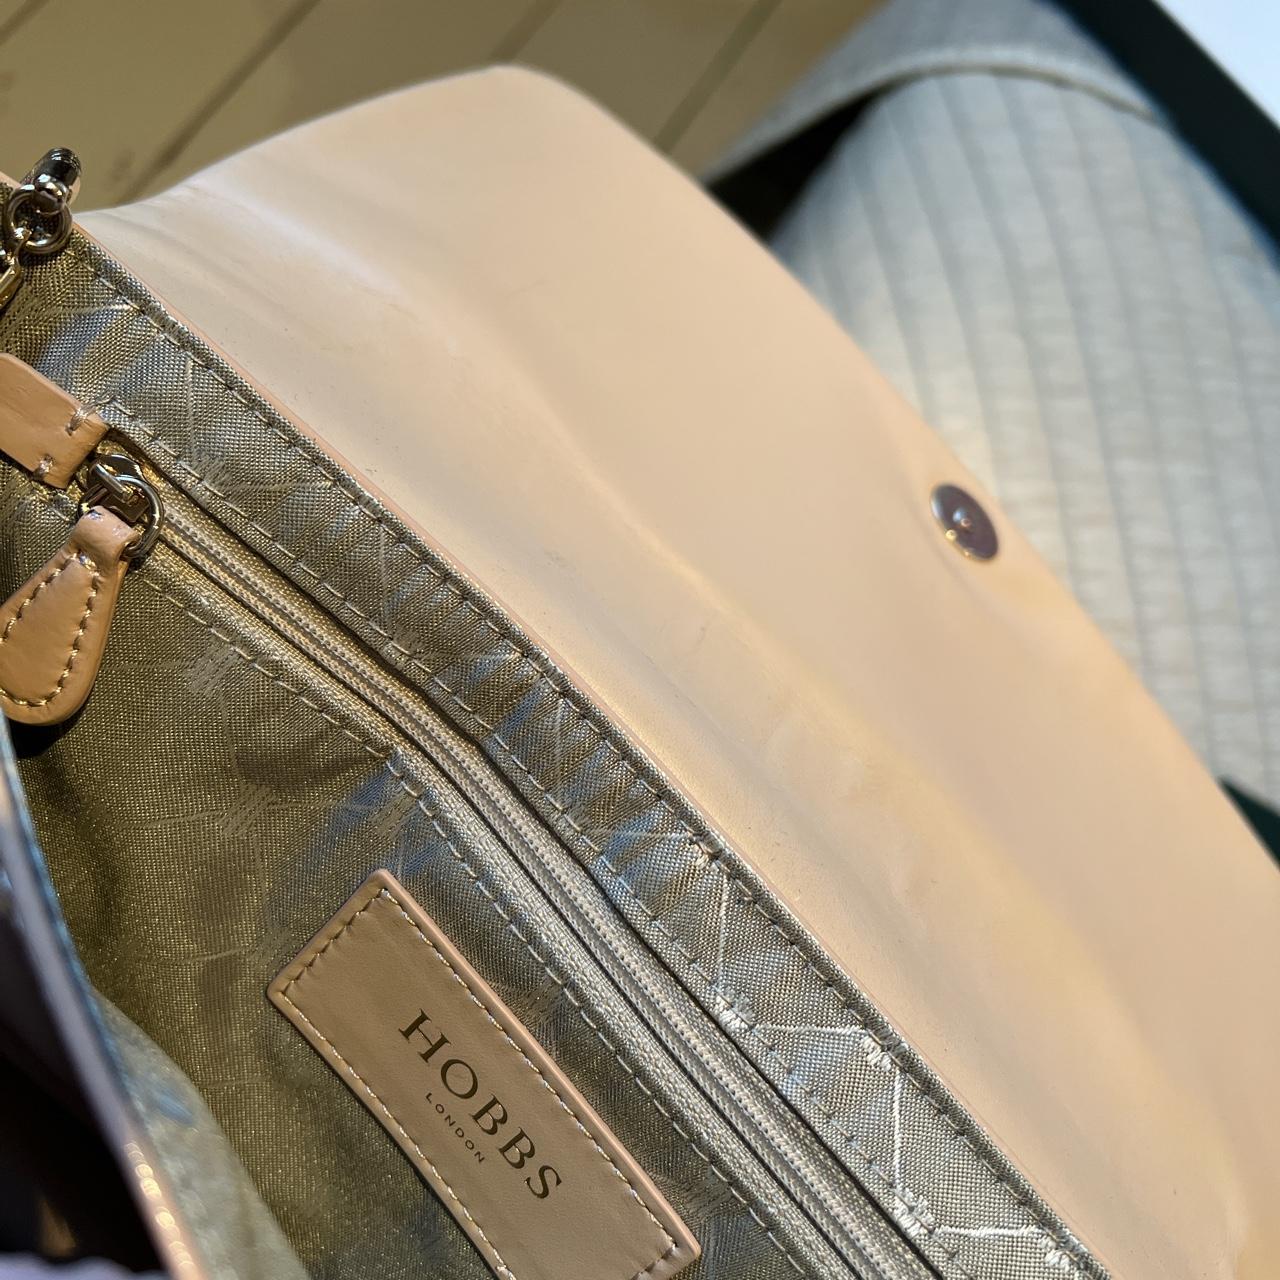 Hobbs leather patent clutch bag in light nude -... - Depop